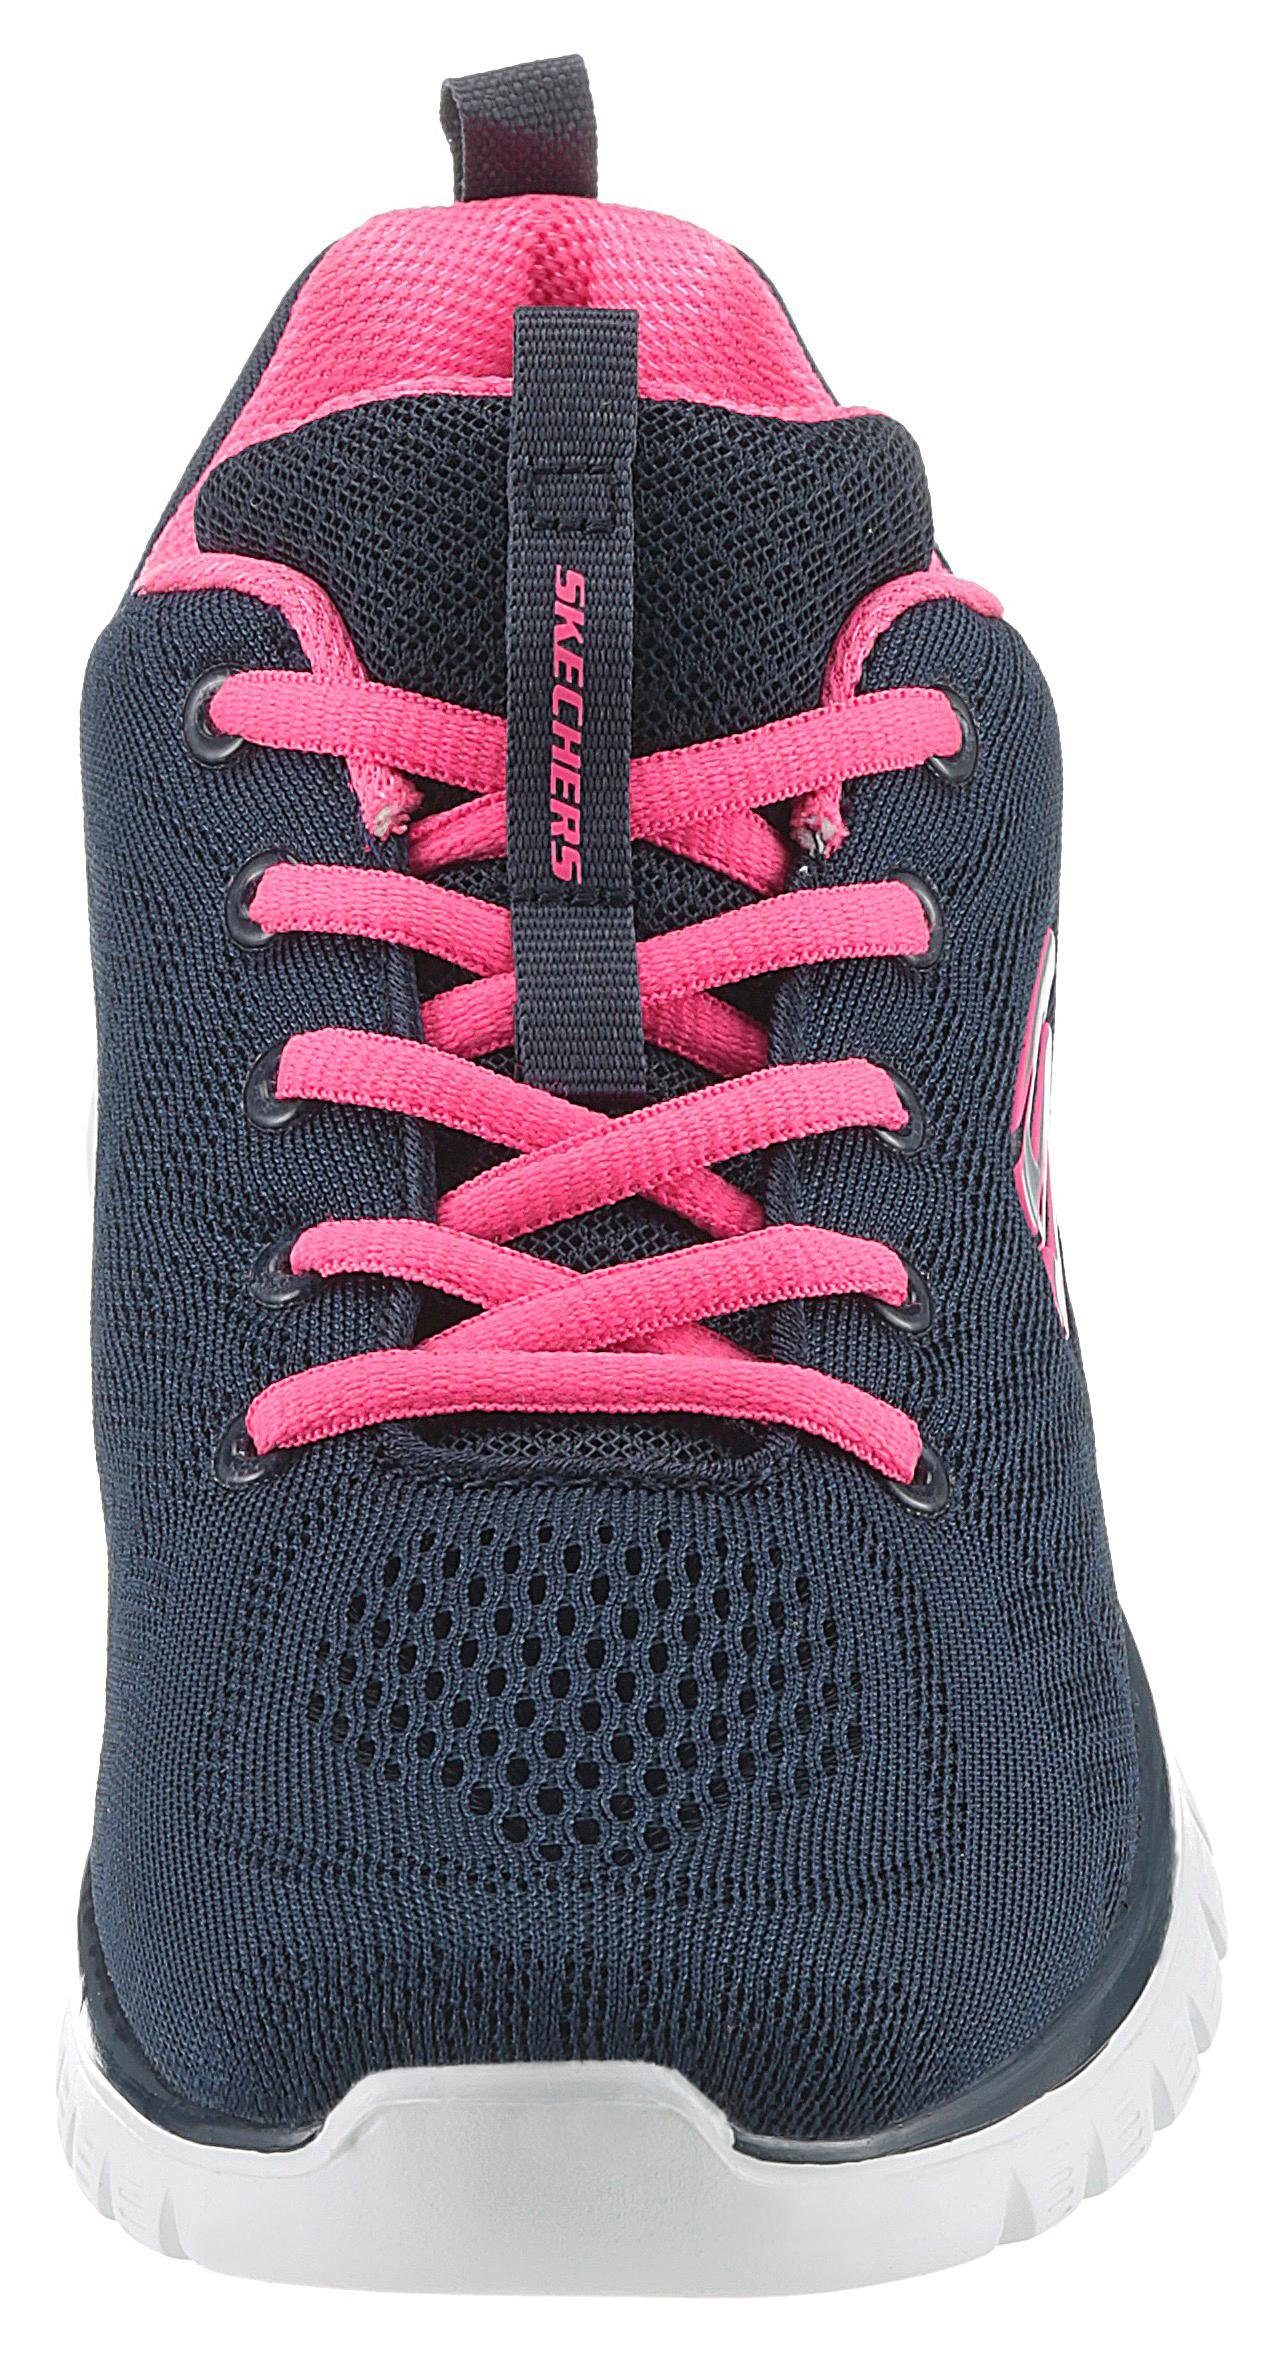 Skechers Graceful - Memory Foam mit Connected Get durch navy-pink Sneaker Dämpfung